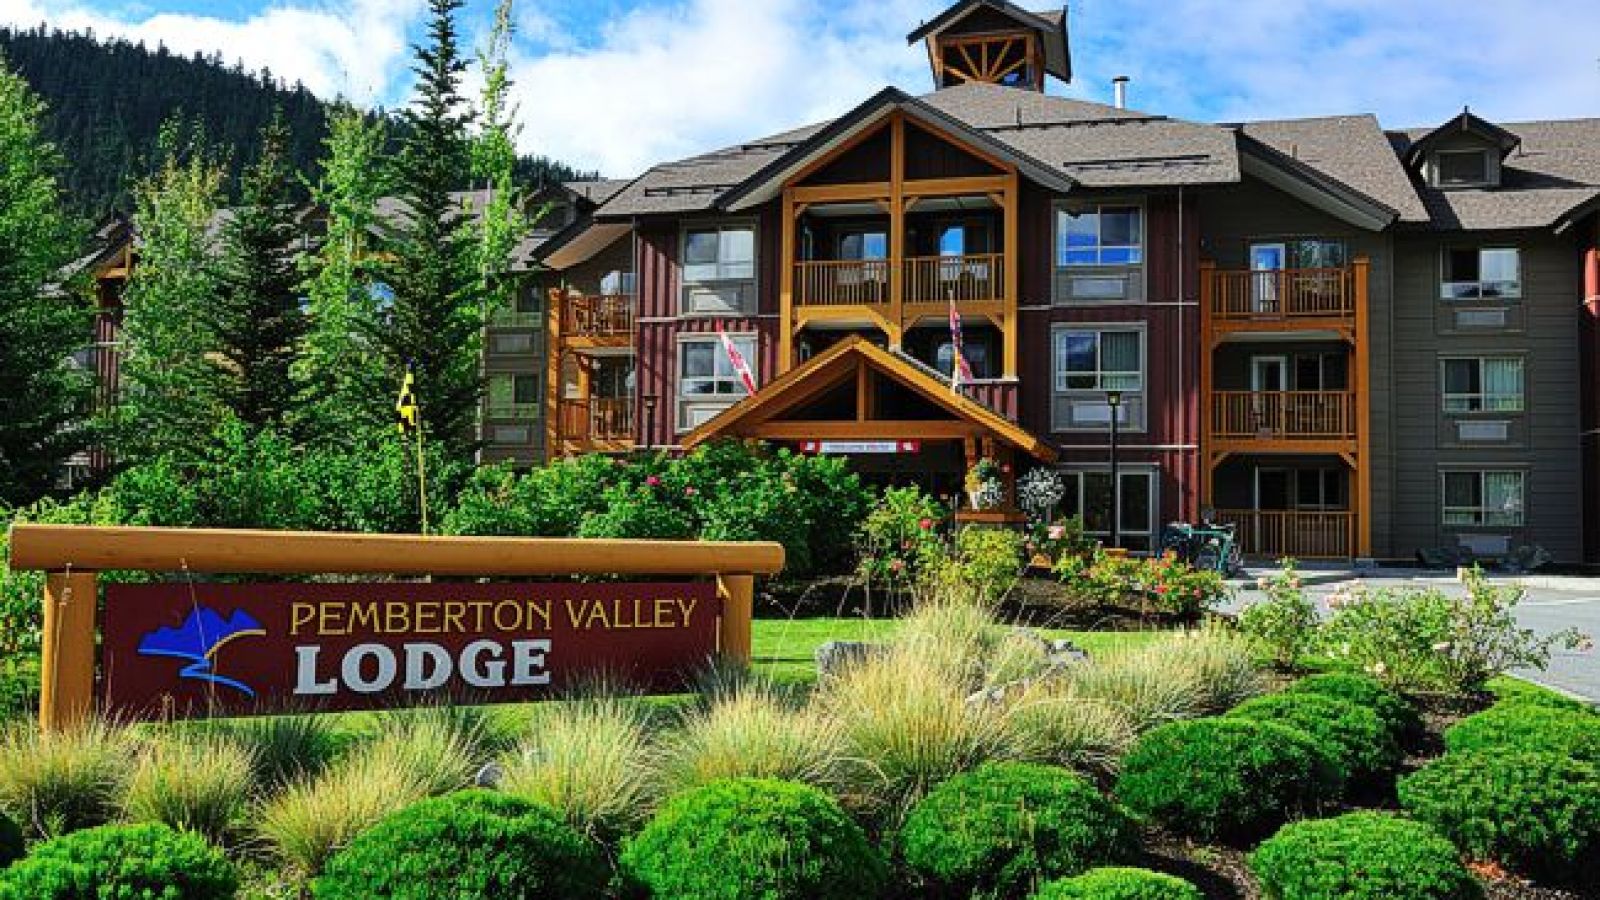 Pemberton Valley Lodge - front view